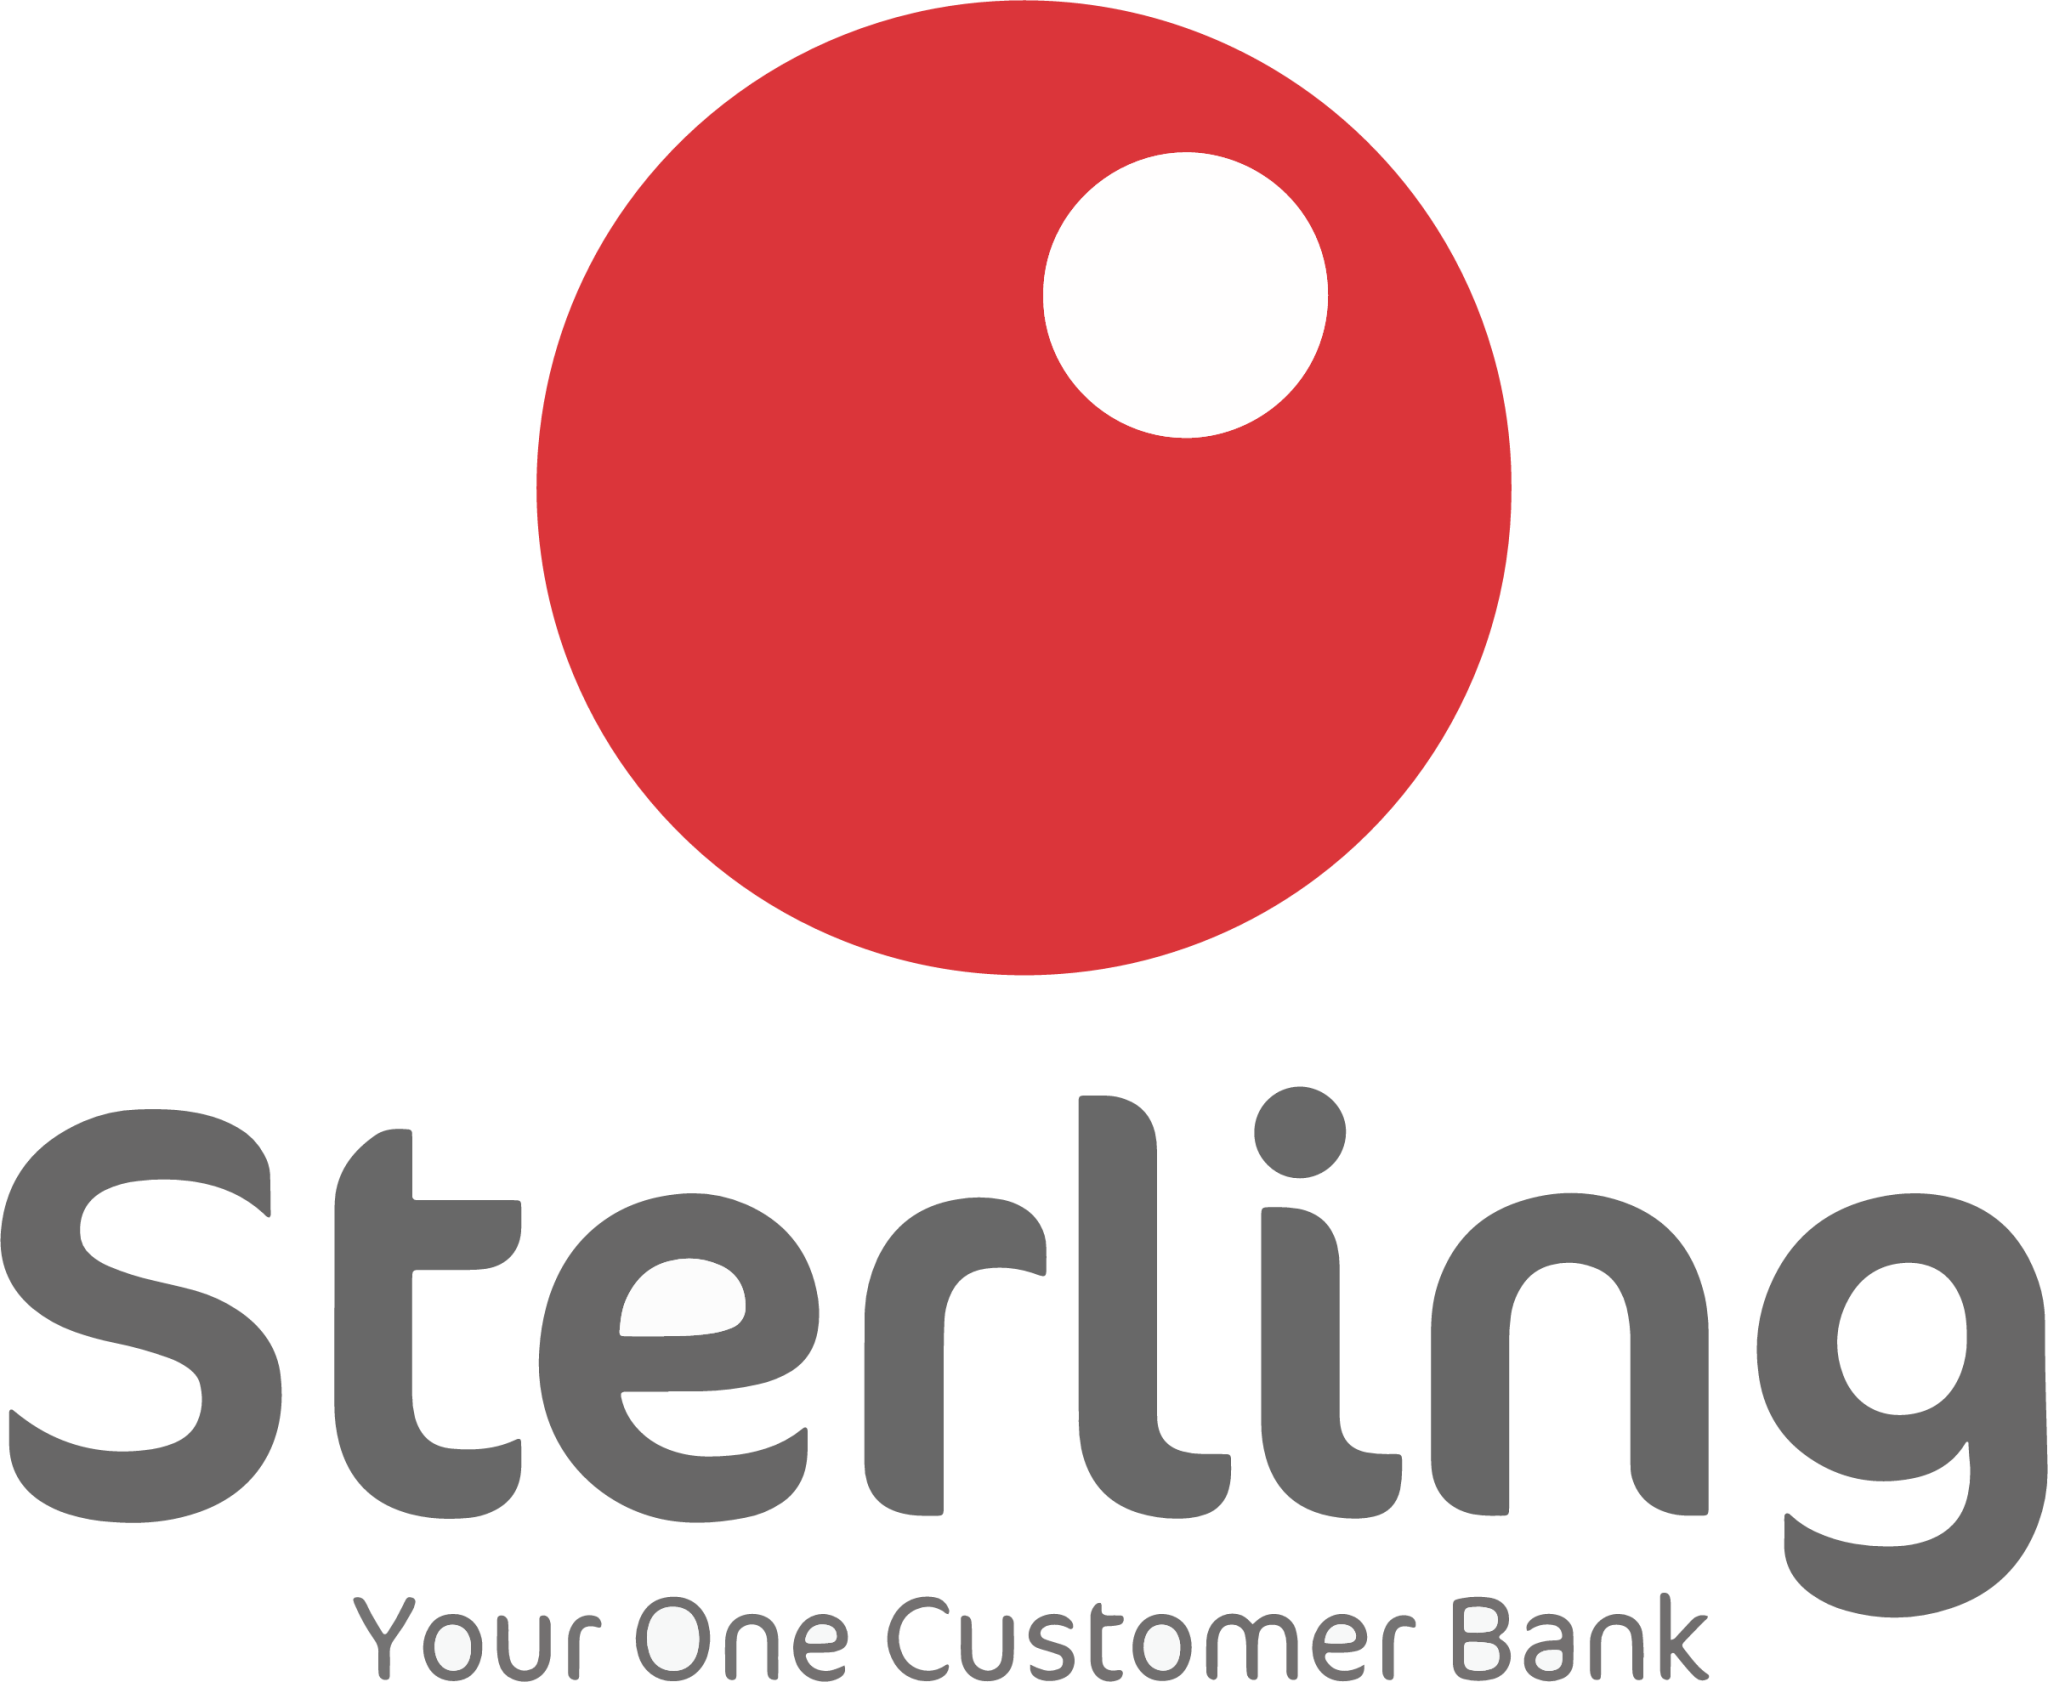 Sterling Bank Plc icon